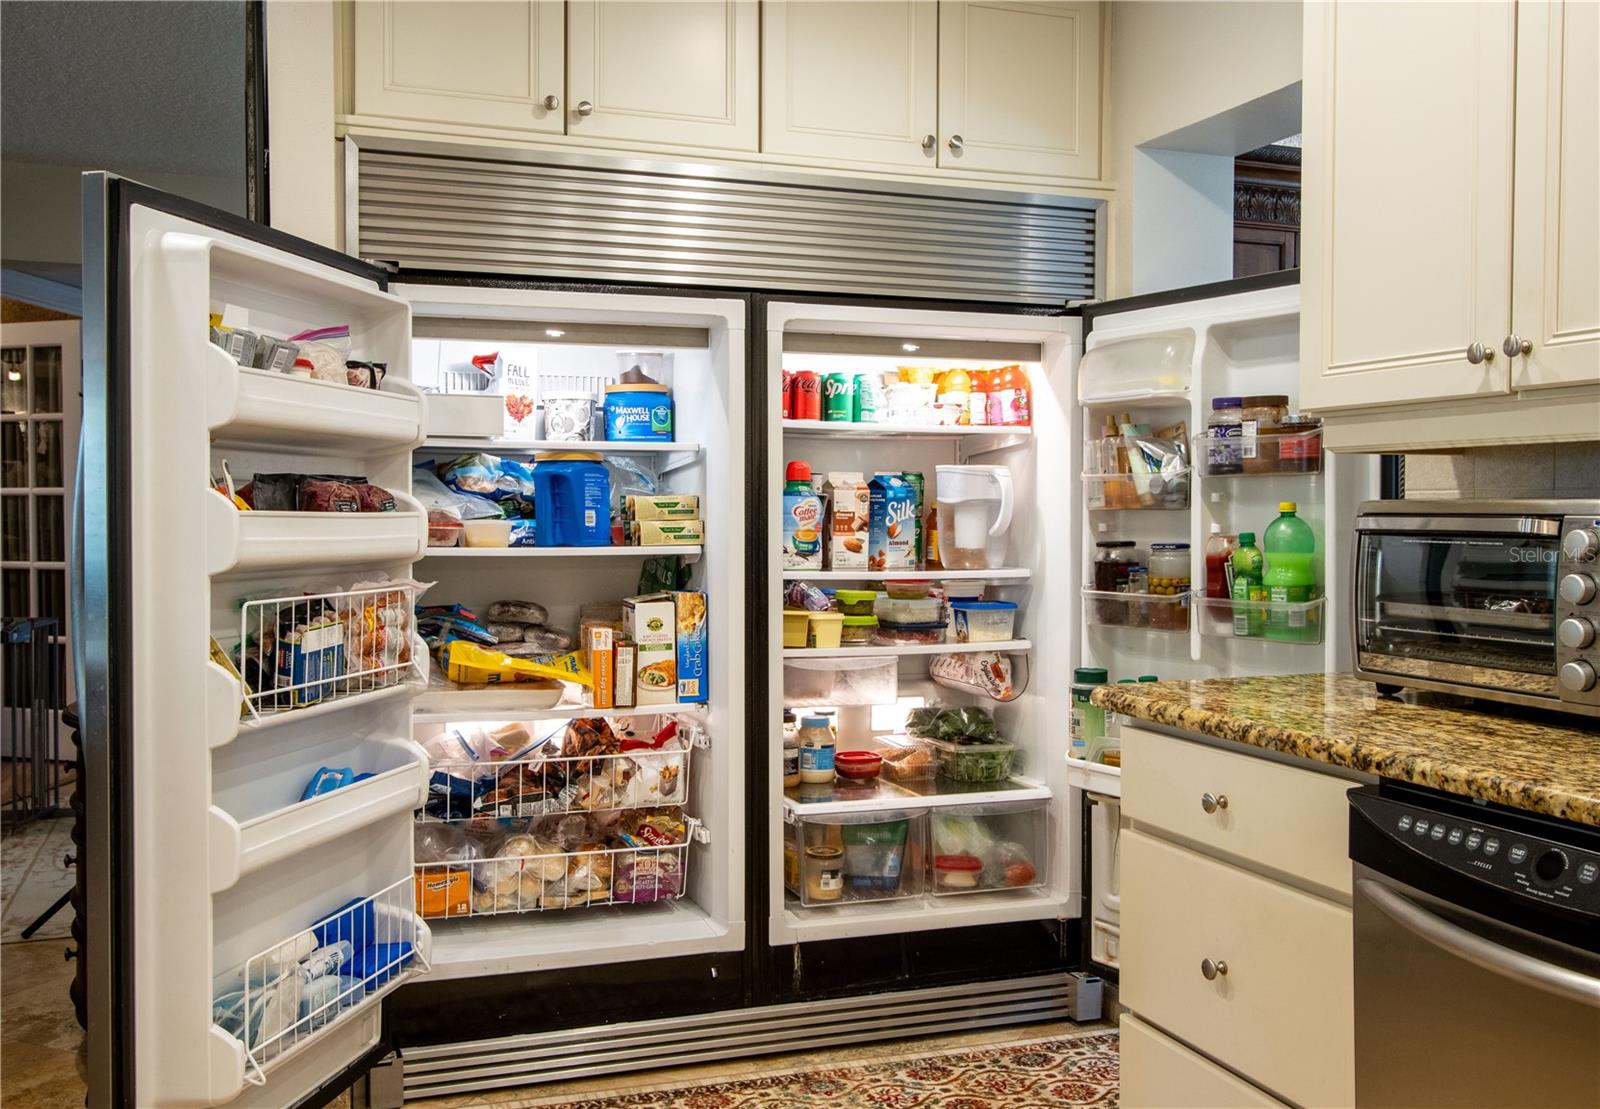 Professional Series Frigidaire refrigerator/freezer side by side.